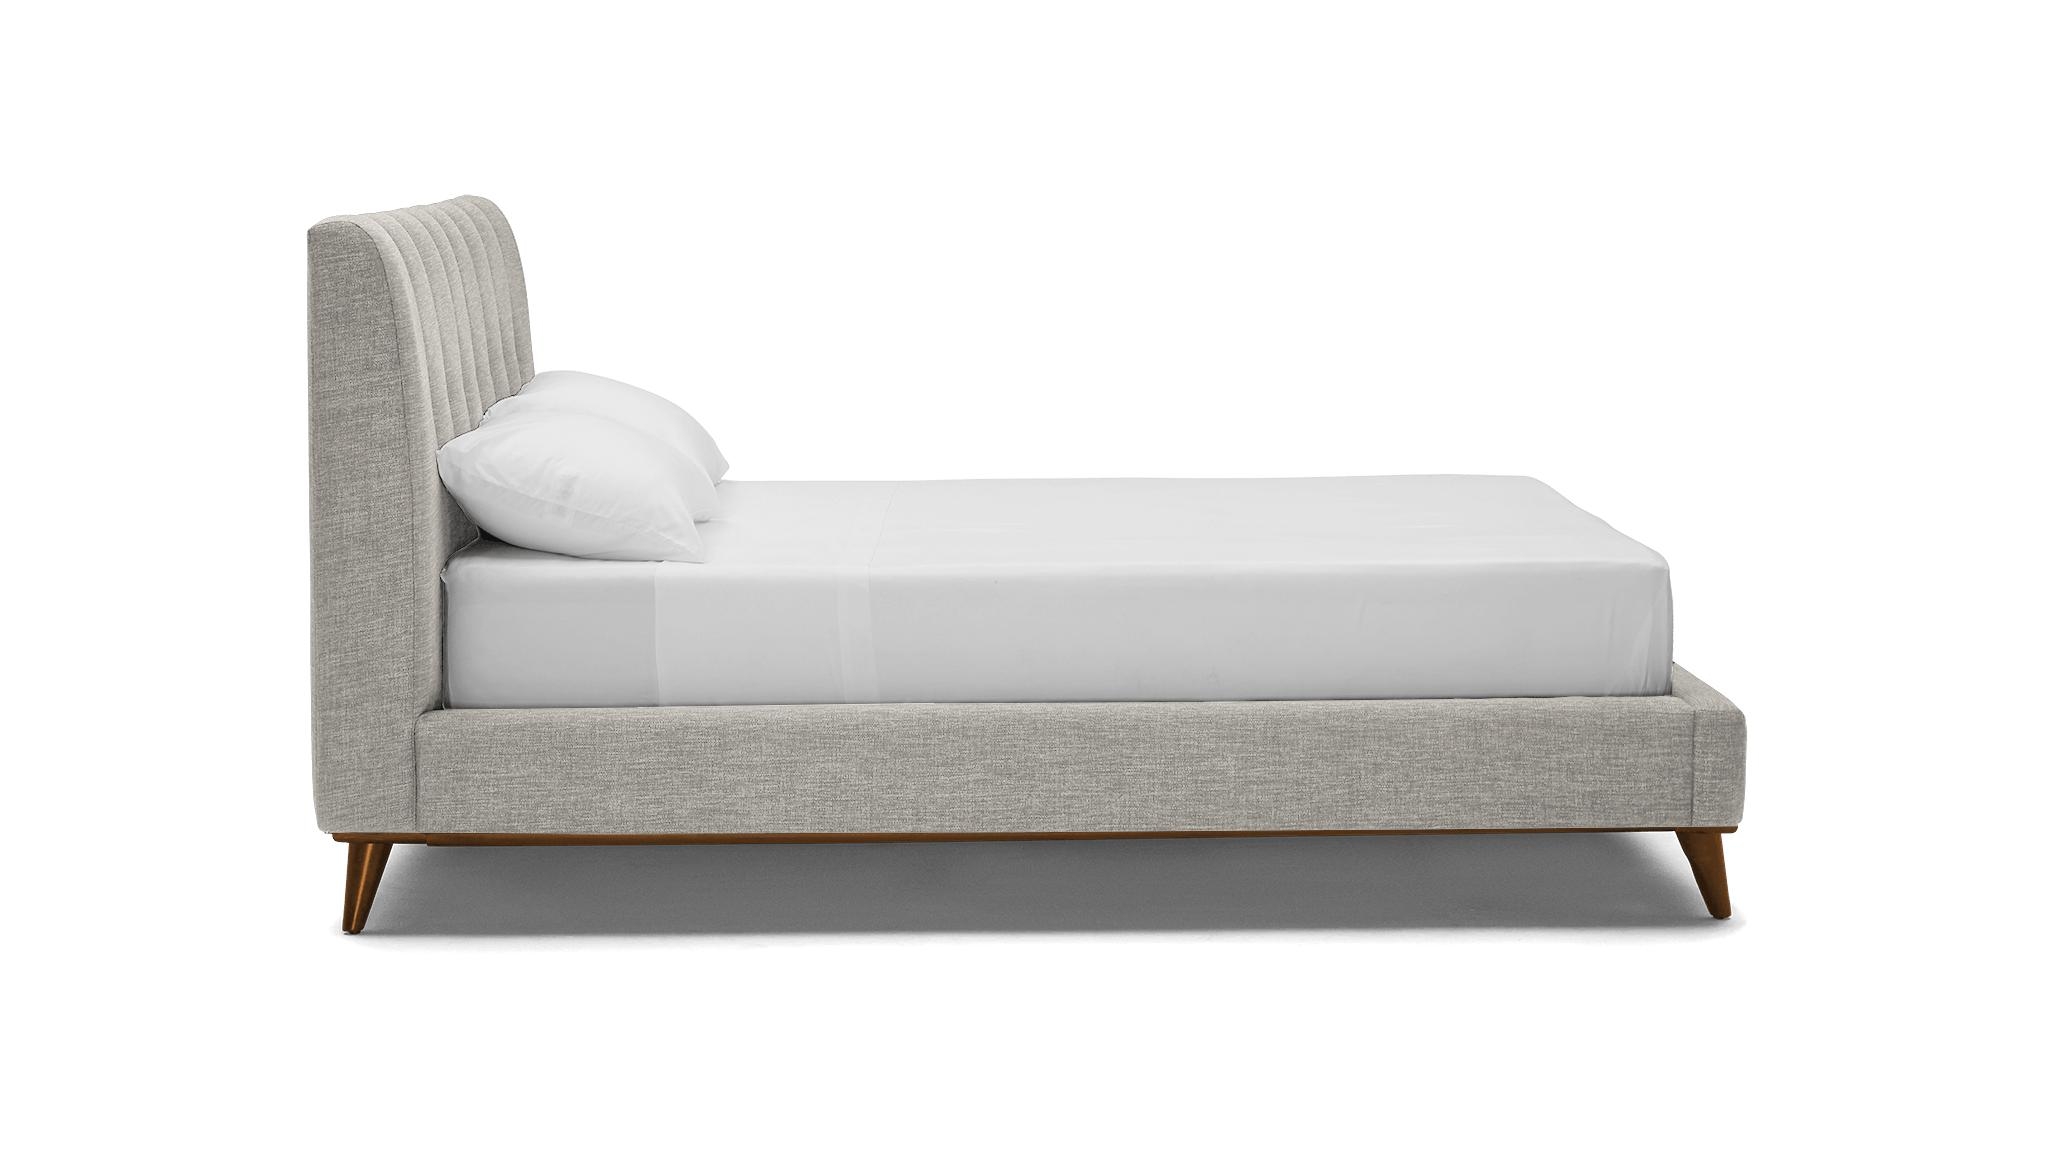 Gray Hughes Mid Century Modern Bed - Bloke Cotton - Mocha - Queen - Image 2